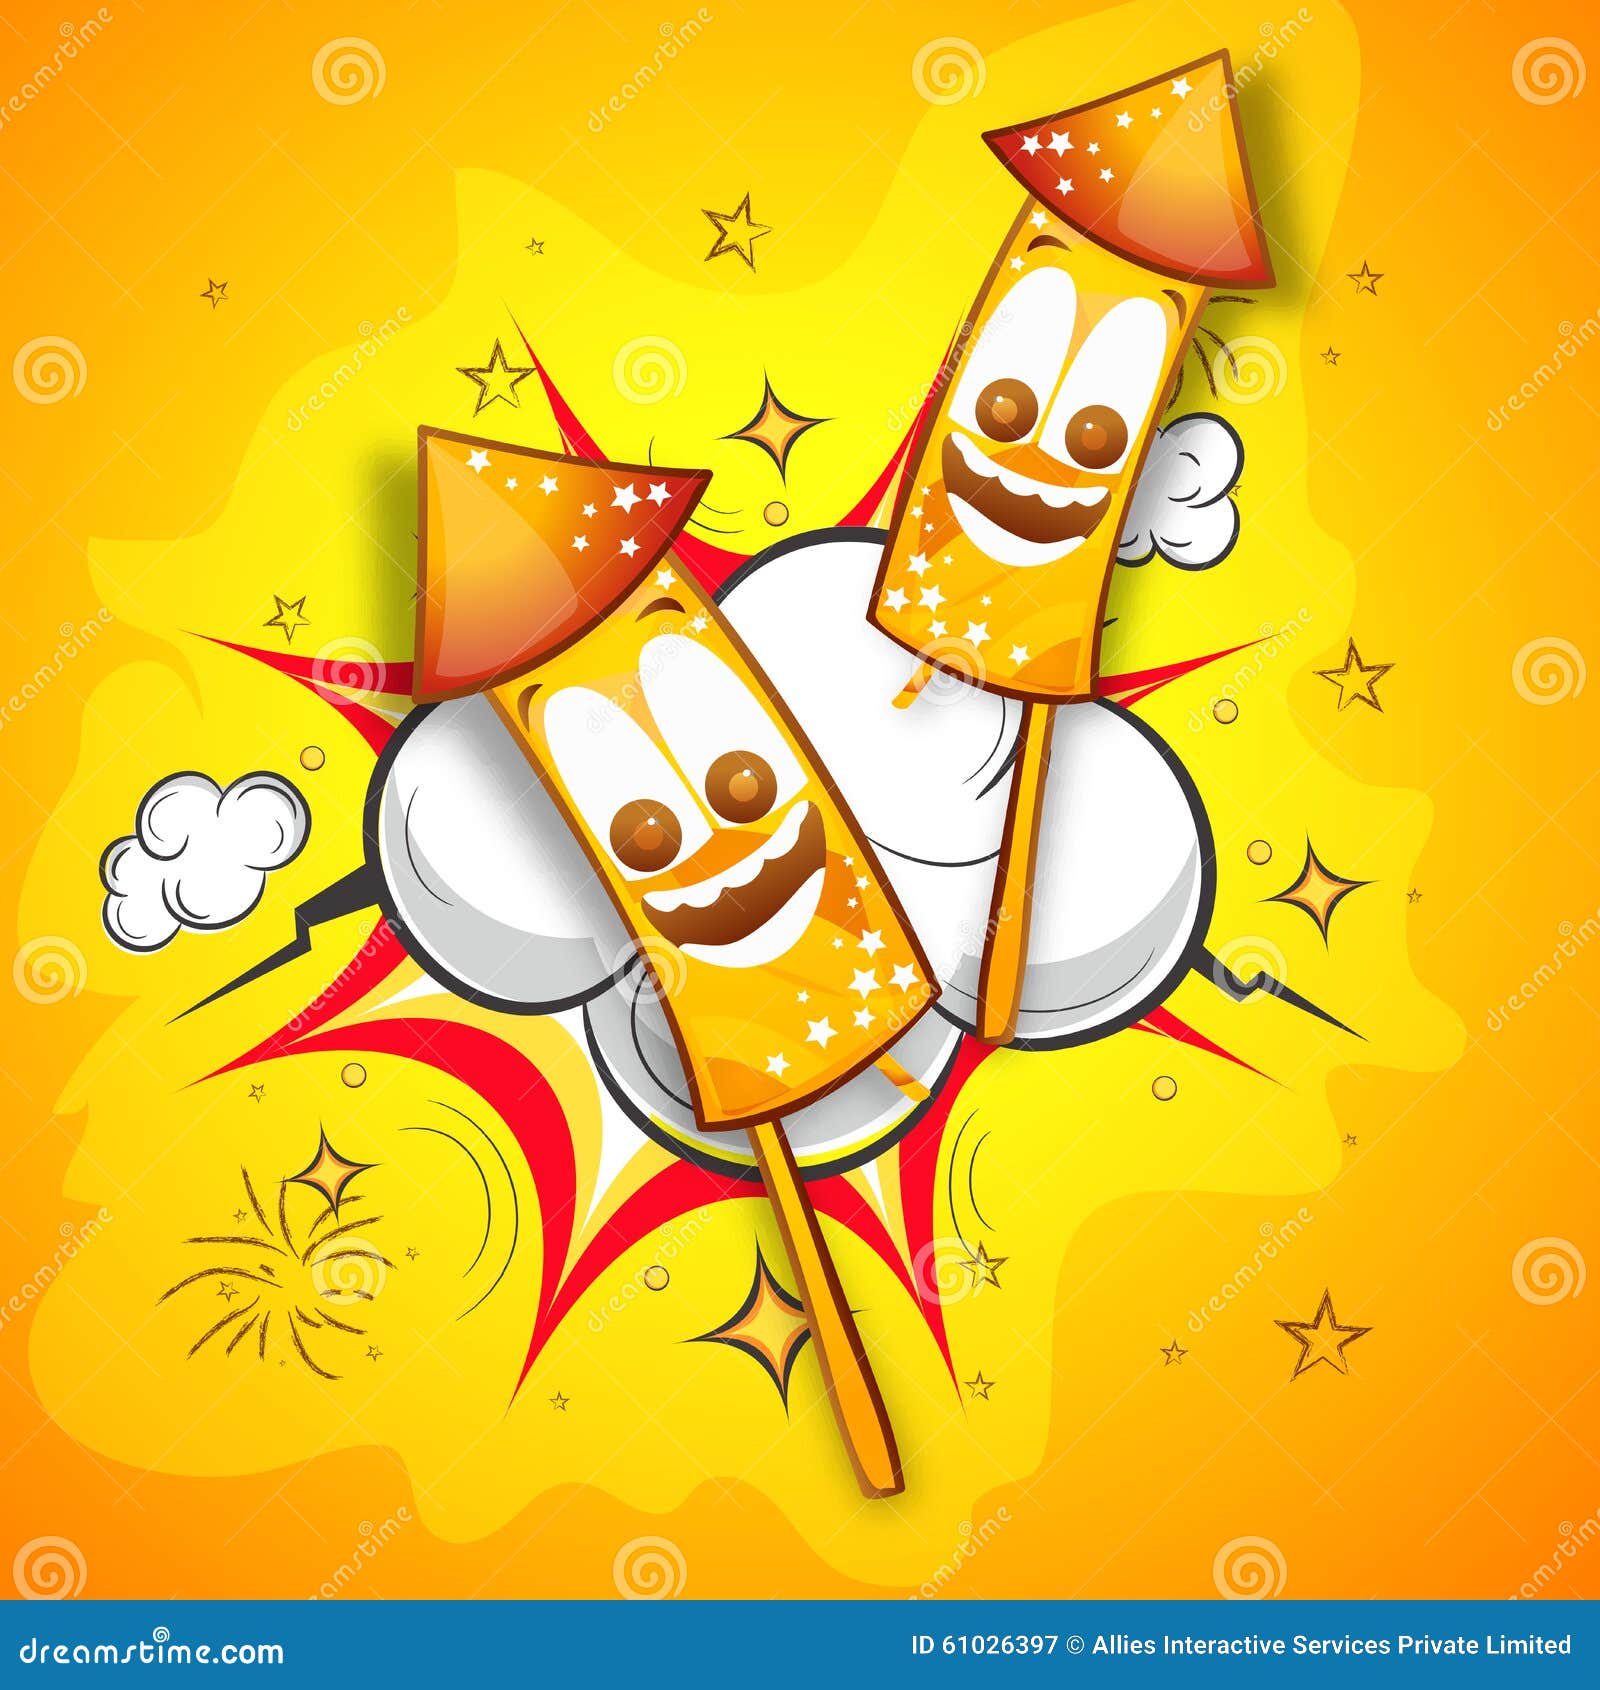 Creative Firecrackers for Happy Diwali. Stock Illustration ...